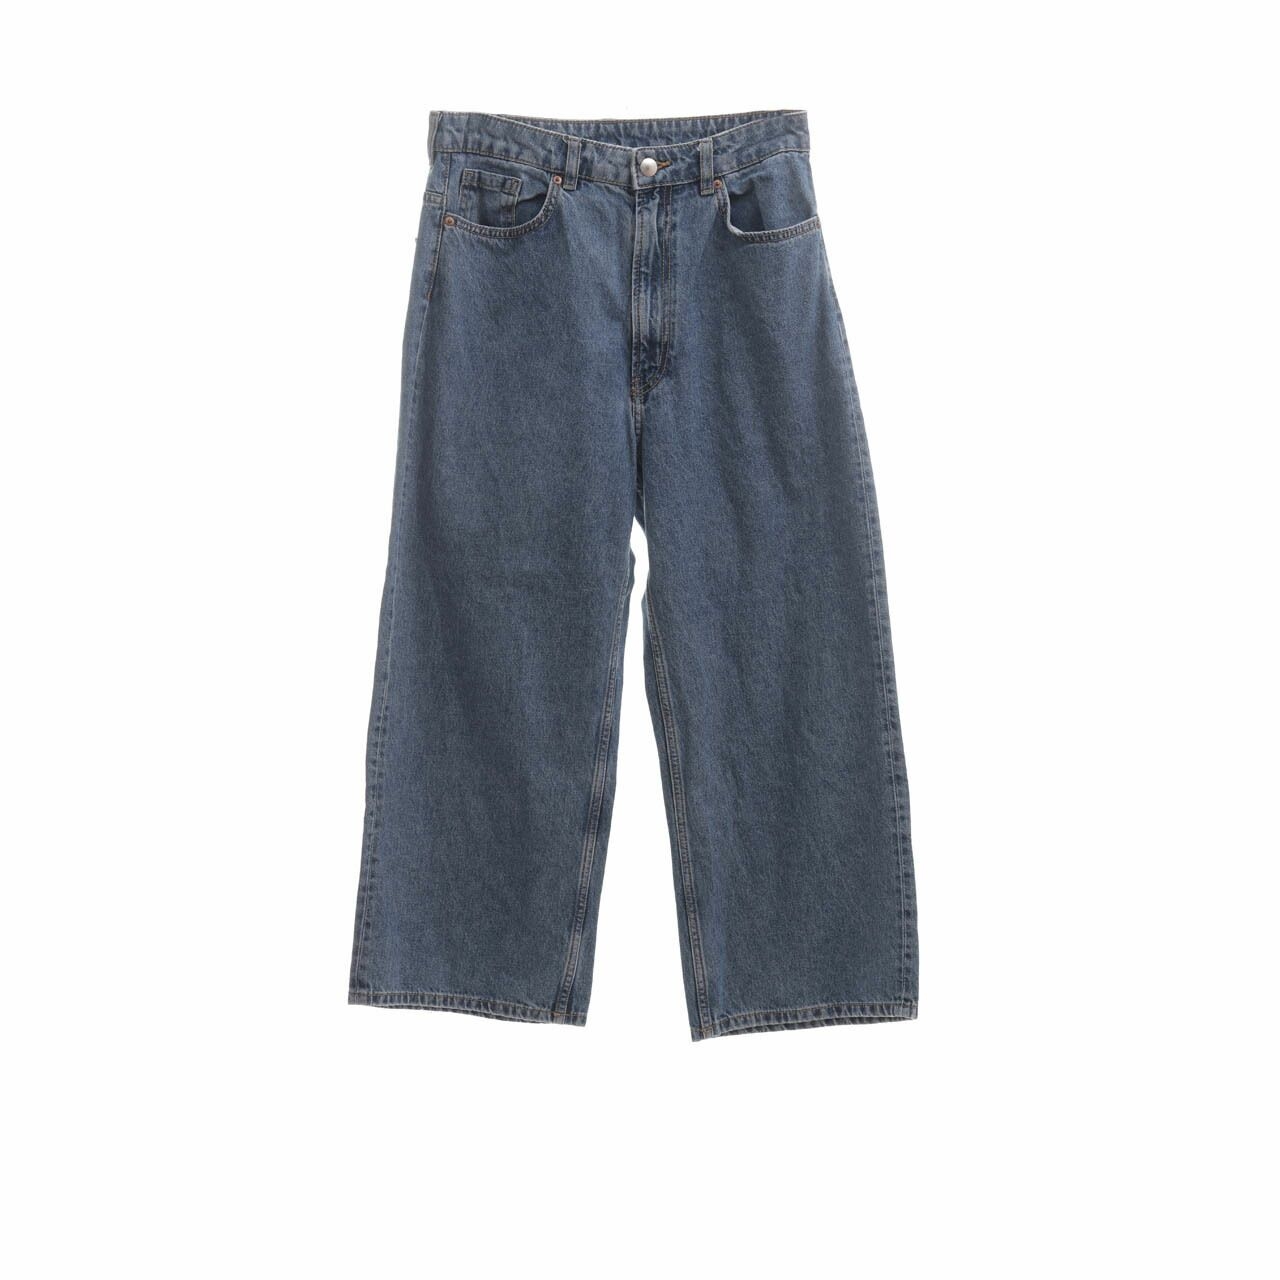 H&M Blue Washed Denim Culottes Long Pants